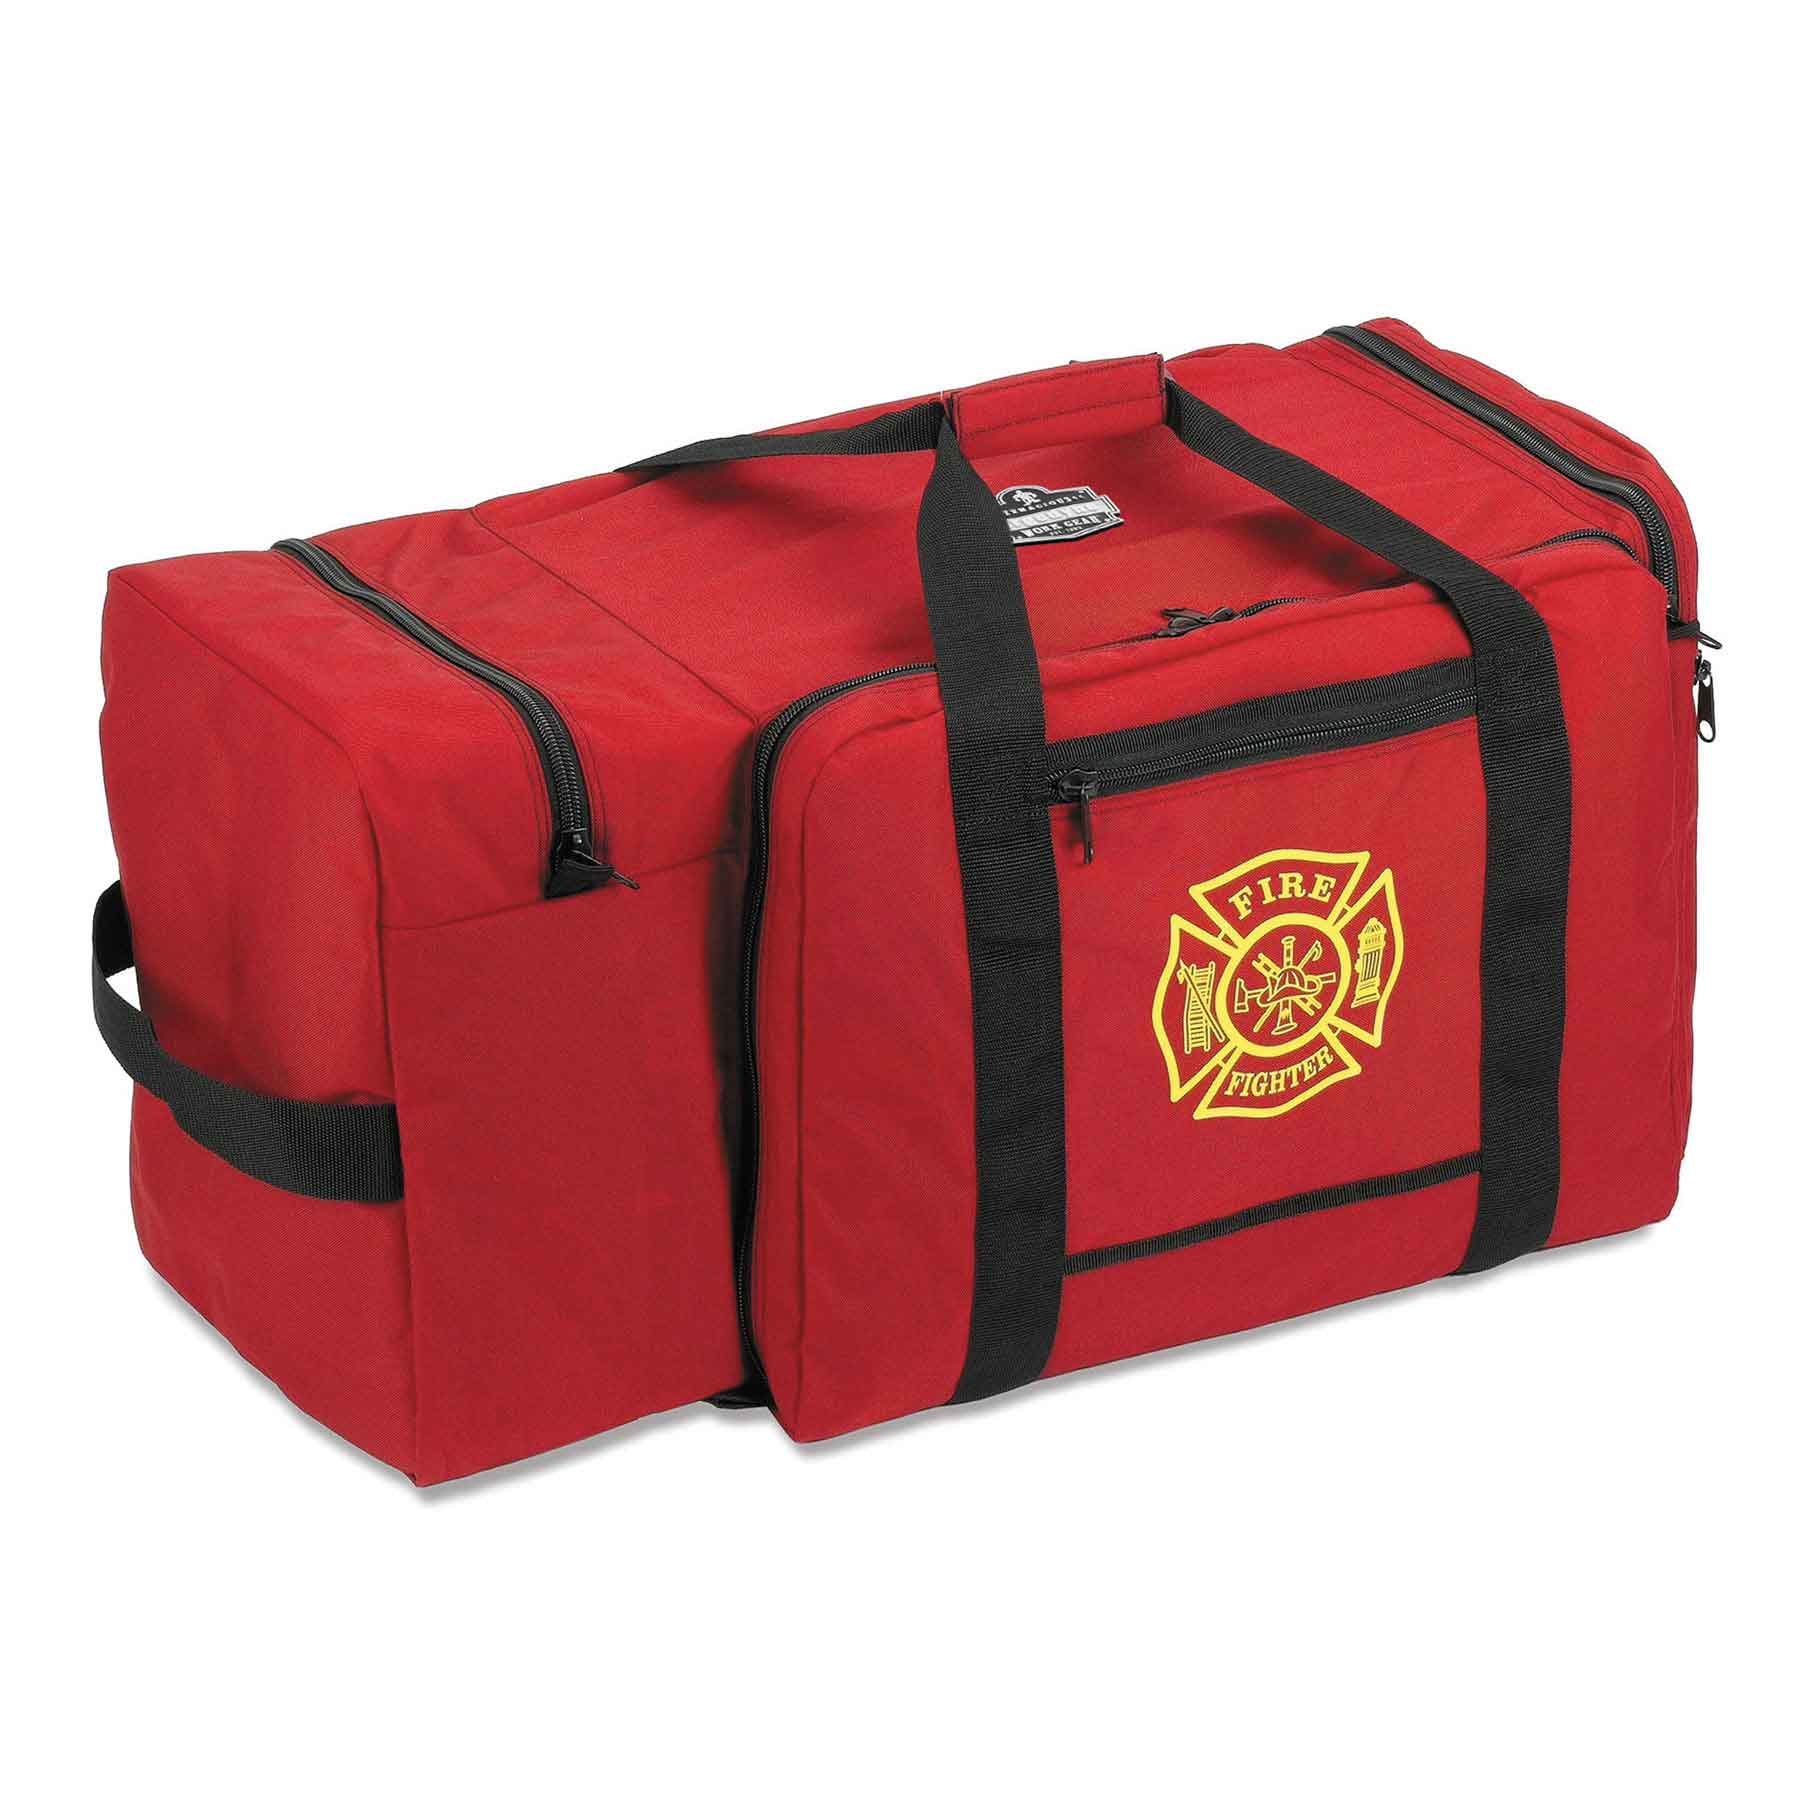 Ergodyne-Arsenal?? 5005 Large Fire & Rescue Gear Bag